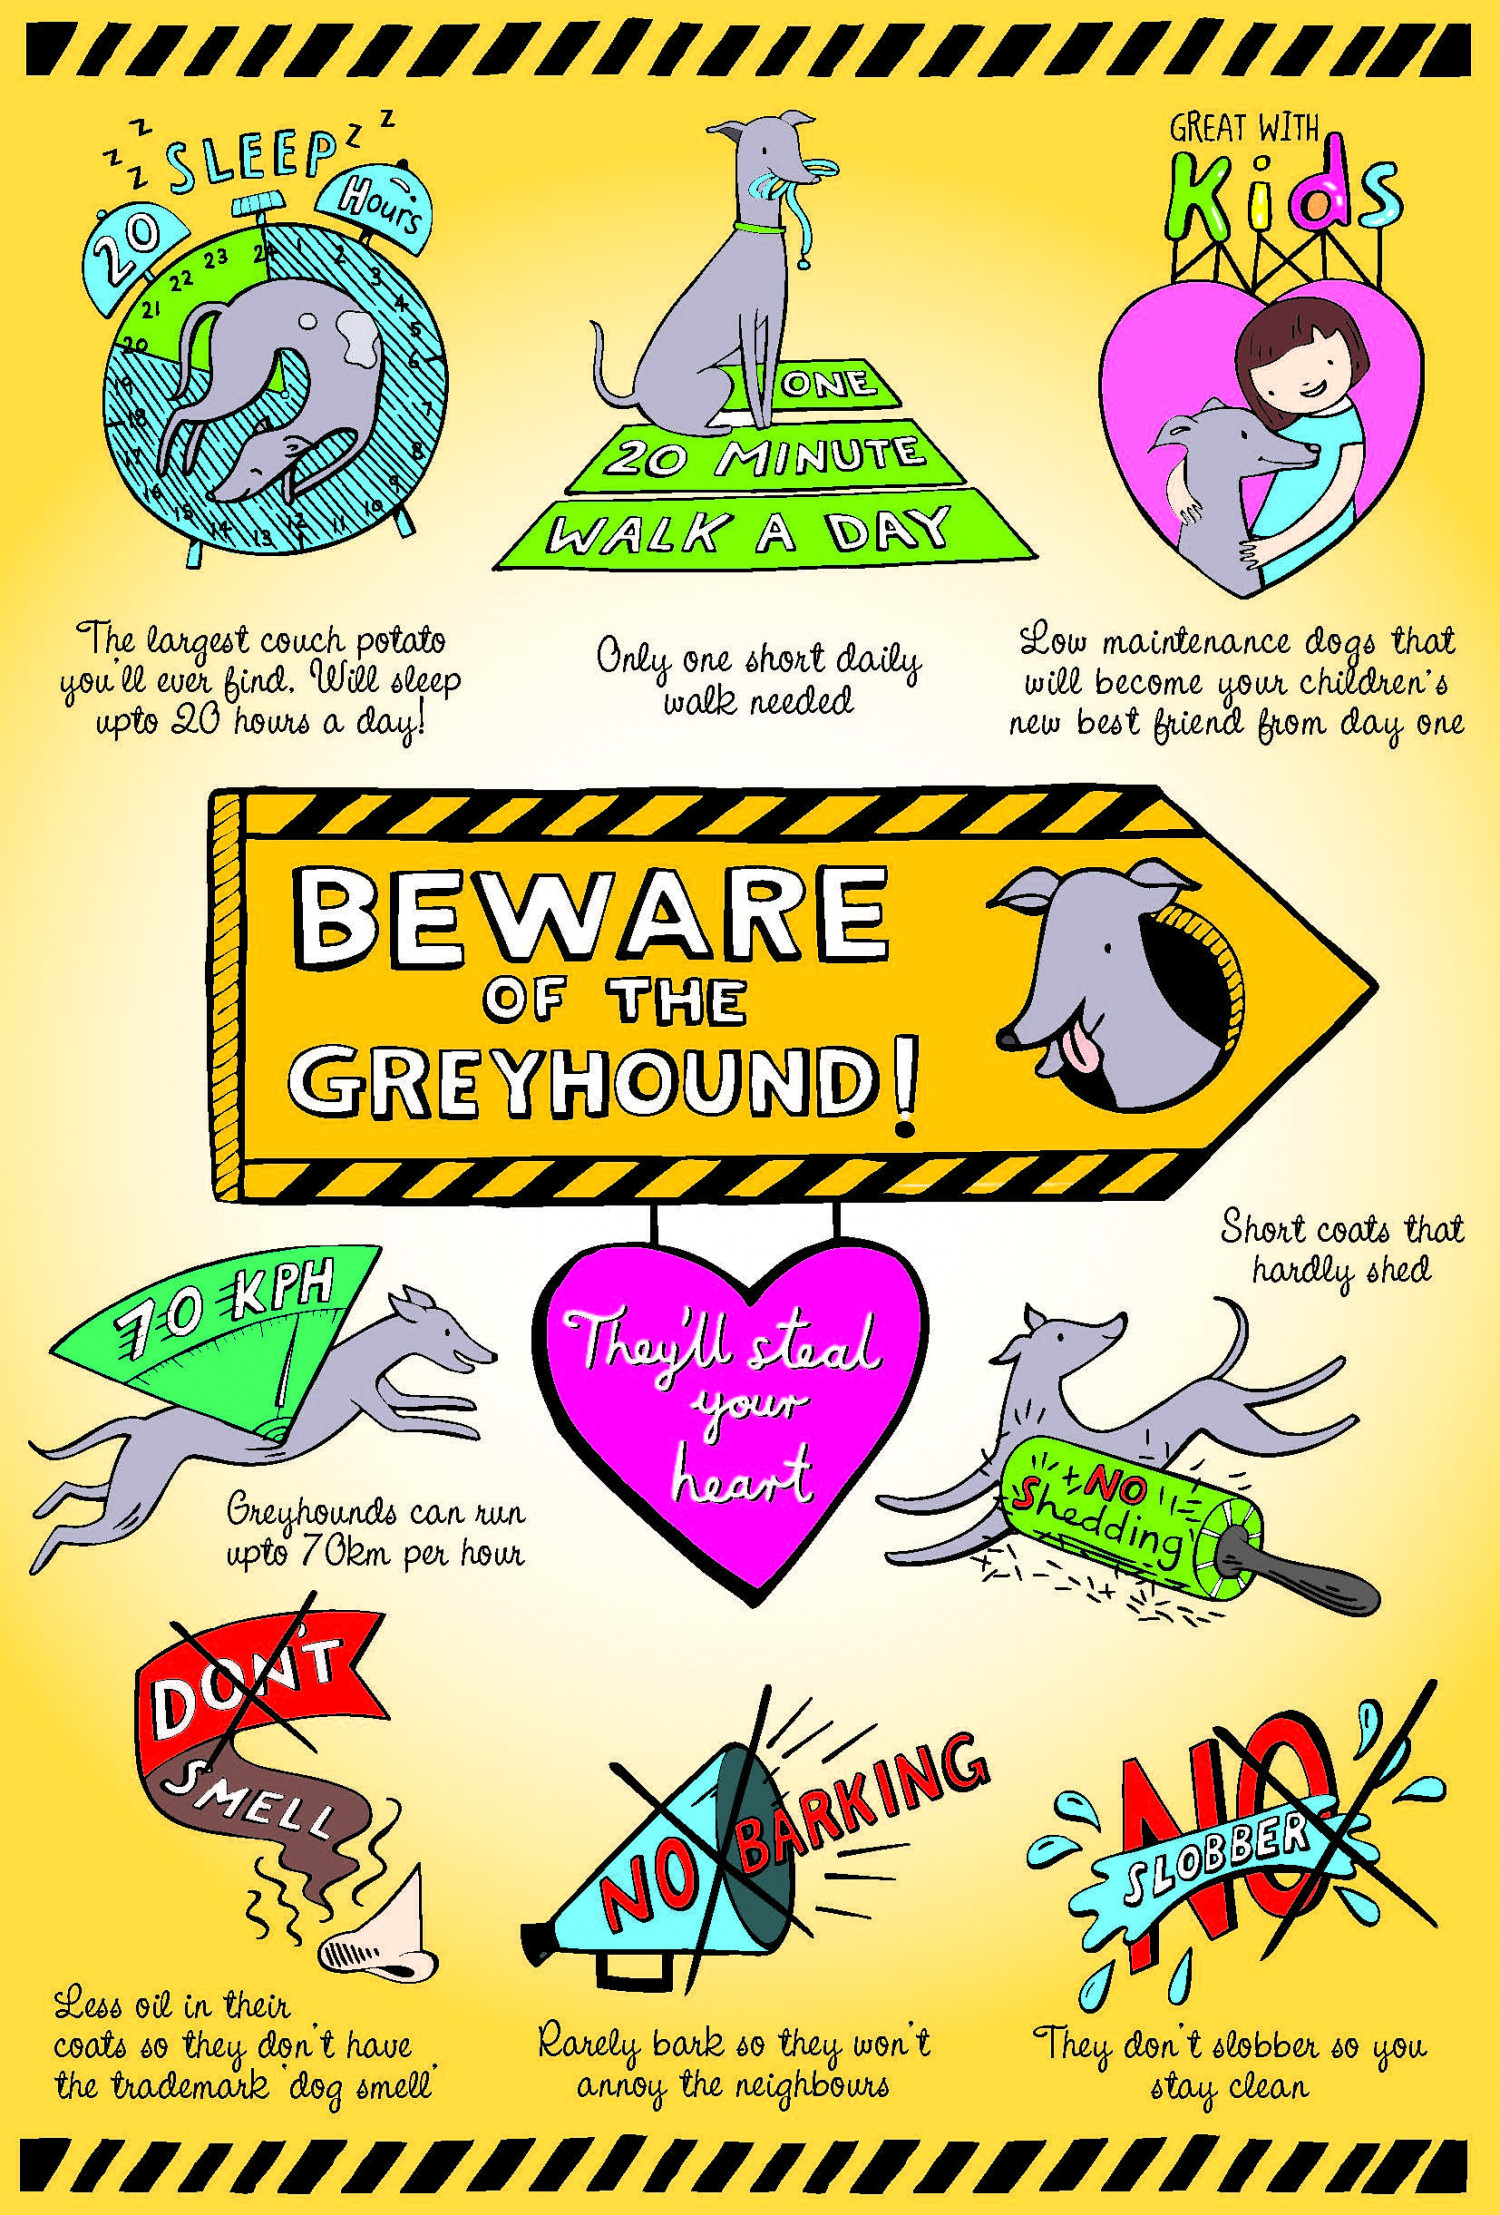  Benefits of Greyhound Ownership Infographic